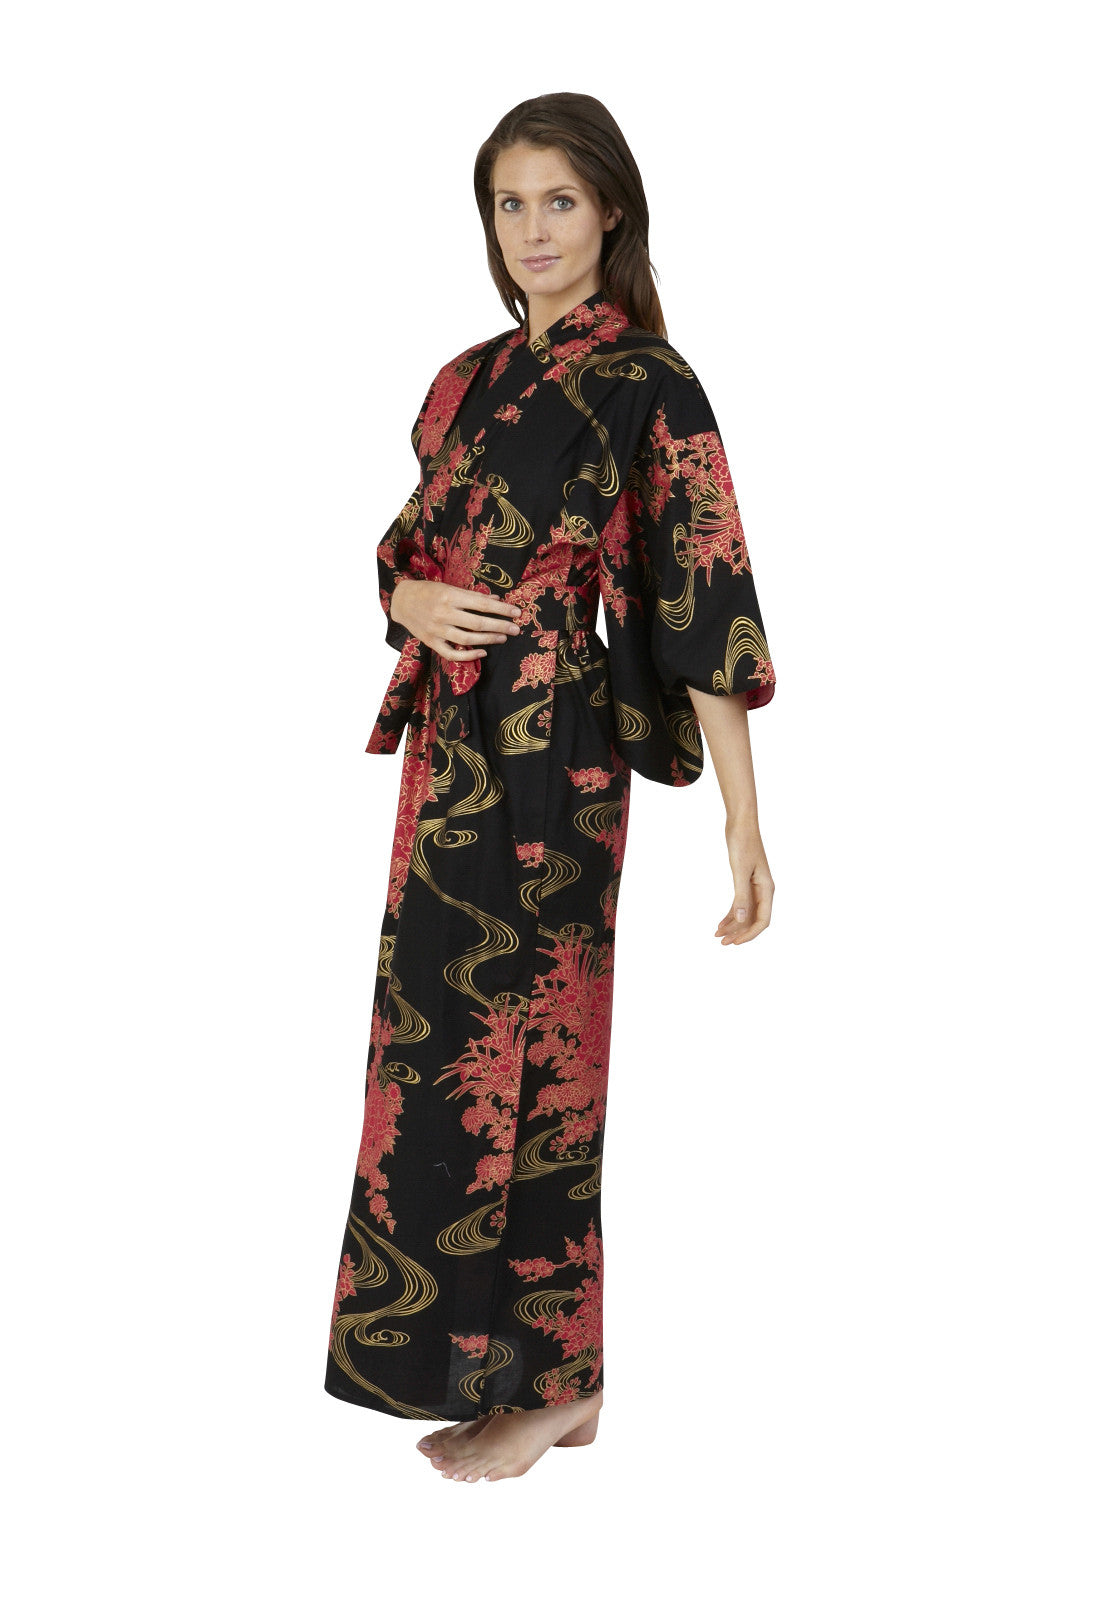 Plus Size Kimono | Kimono Plus Size | Kimono Jacket – Beautiful Robes